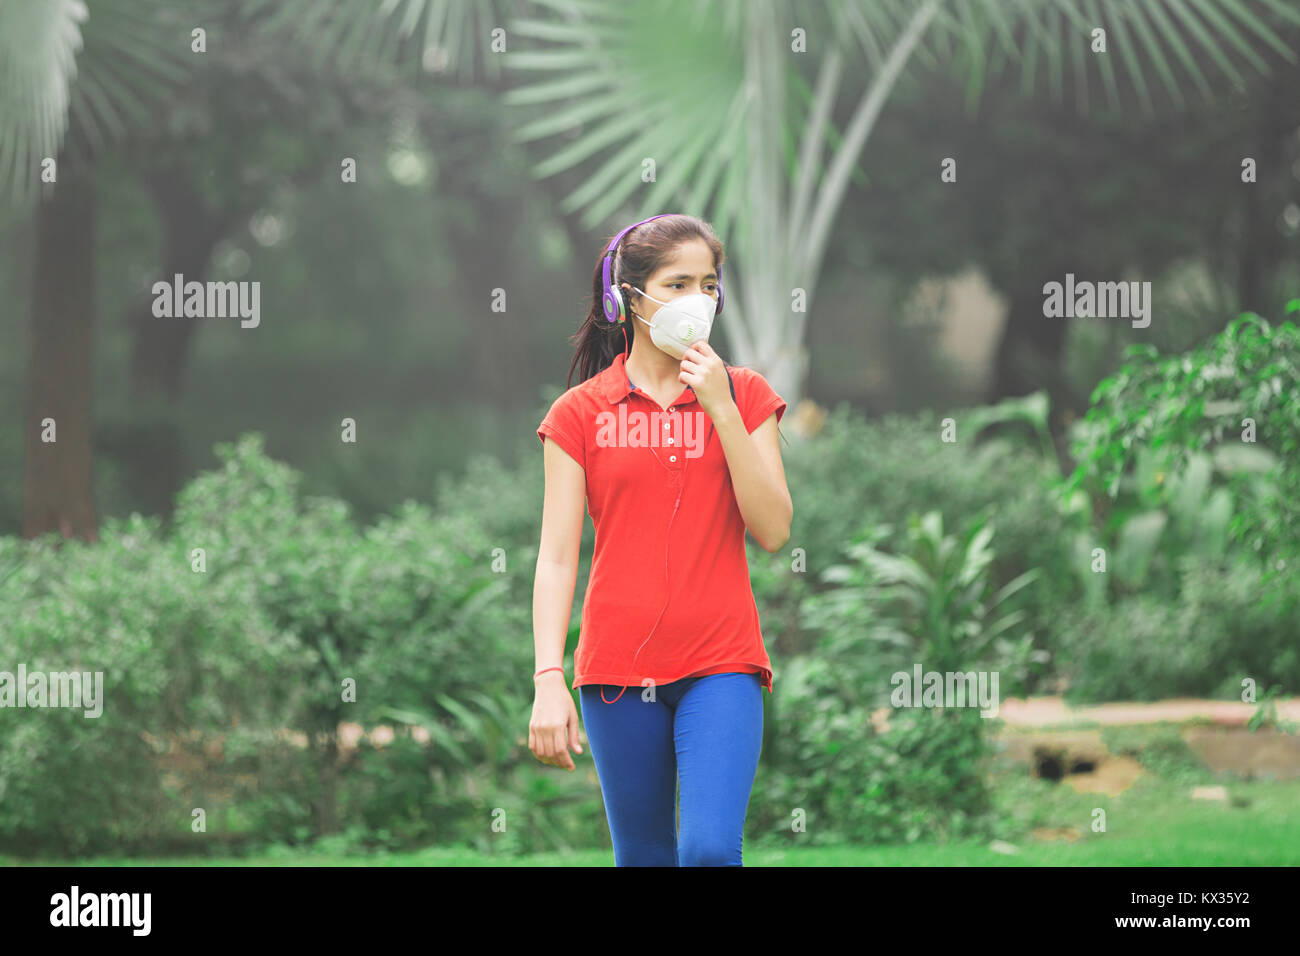 1 Person Exercise Girl Park Pollution Swine Influenza Virus Walking Stock Photo